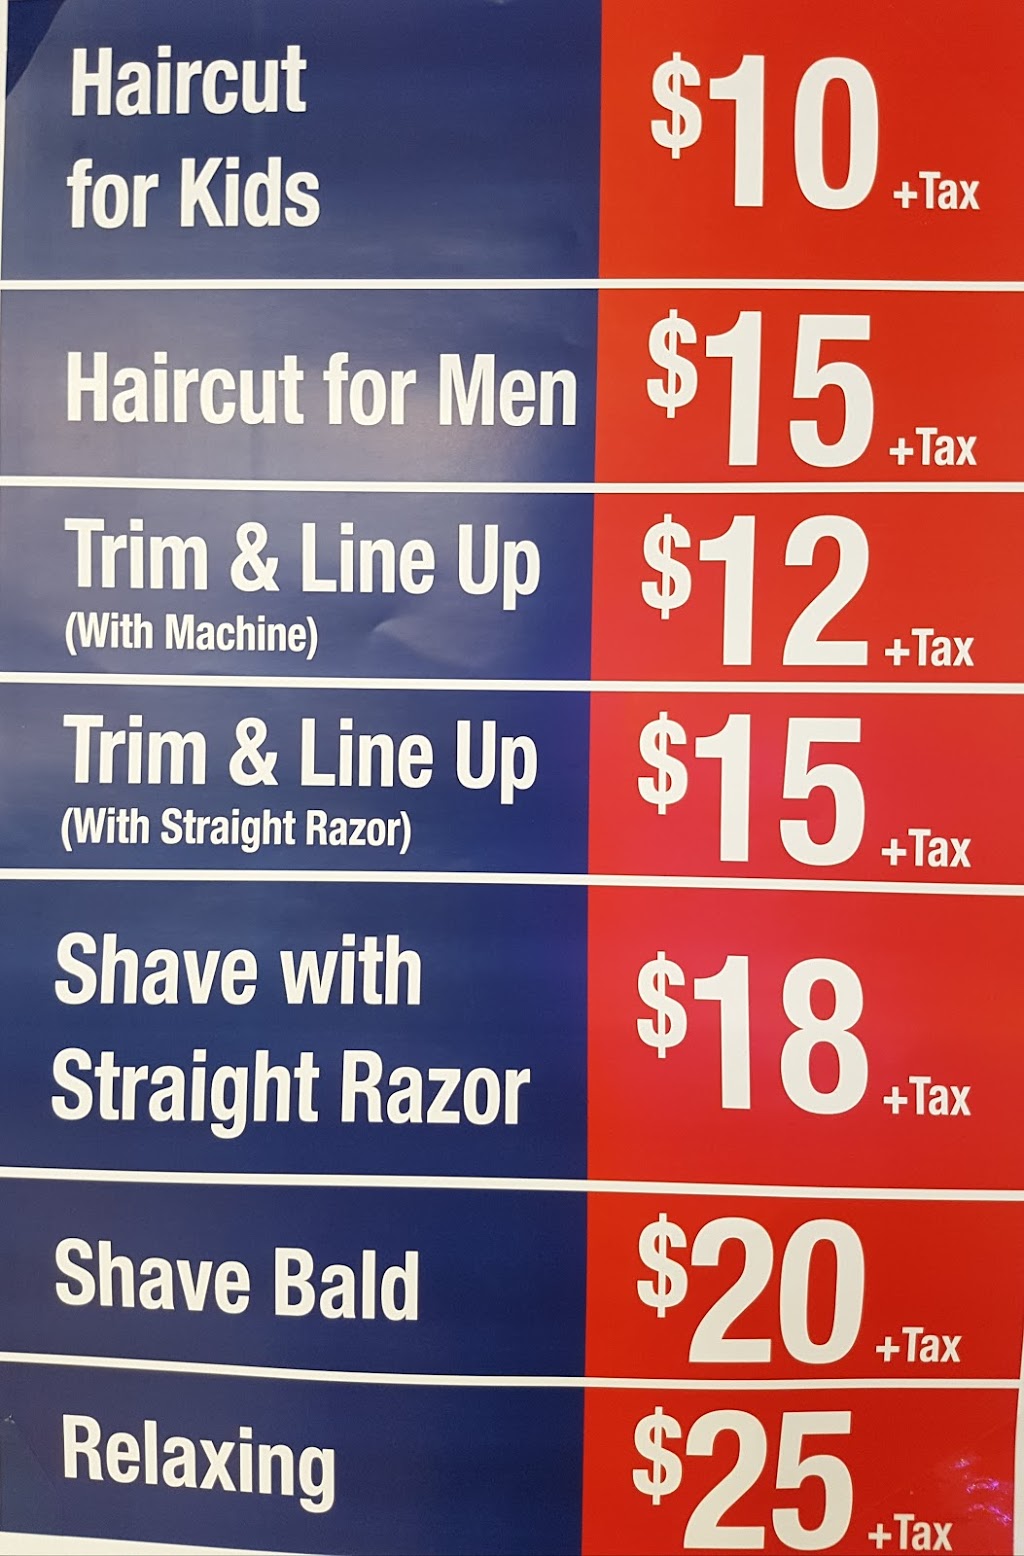 Toronto stylish barber shop | 62 Overlea Boulevard #18, East, Toronto, ON M4H 1C4, Canada | Phone: (647) 926-5001